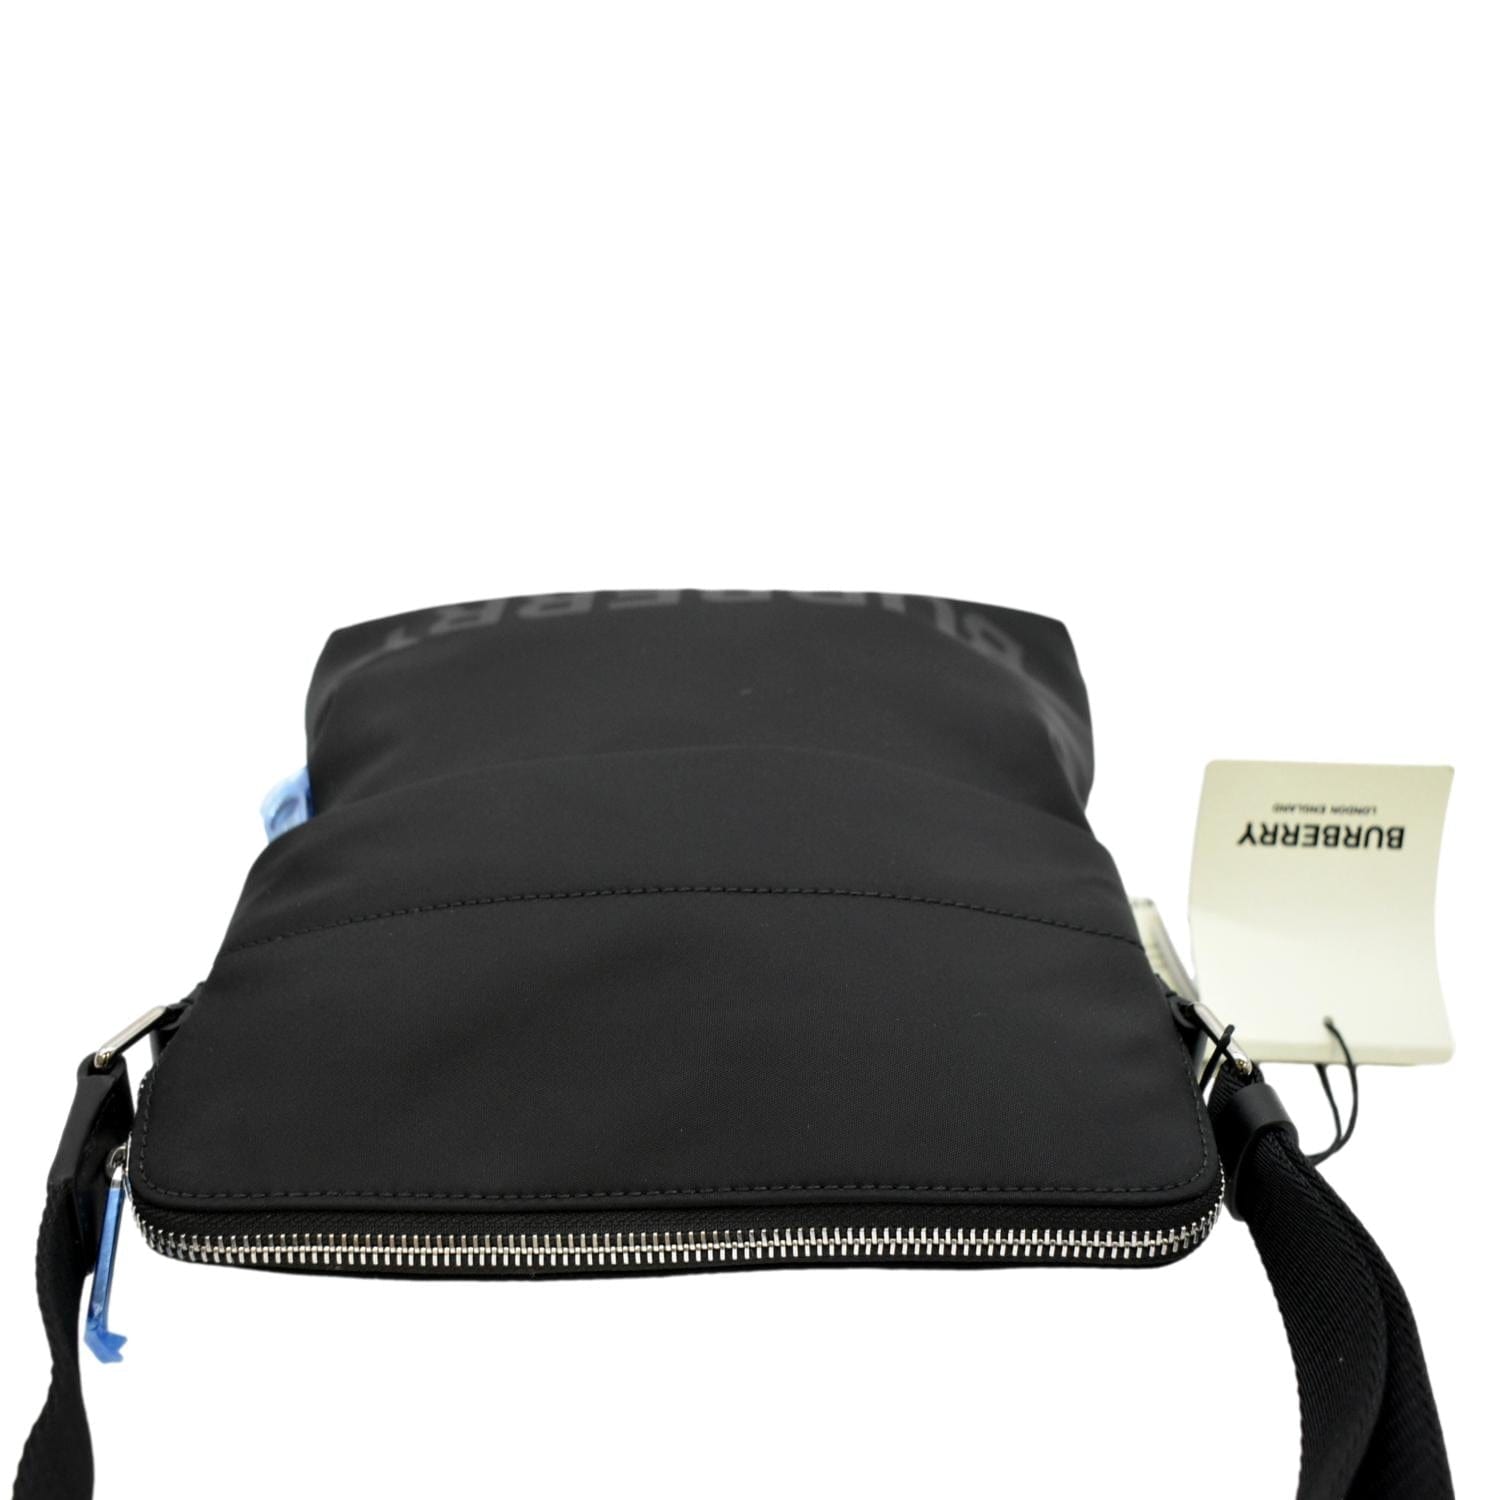 Burberry Crossbody Bags & Handbags for Women, Authenticity Guaranteed